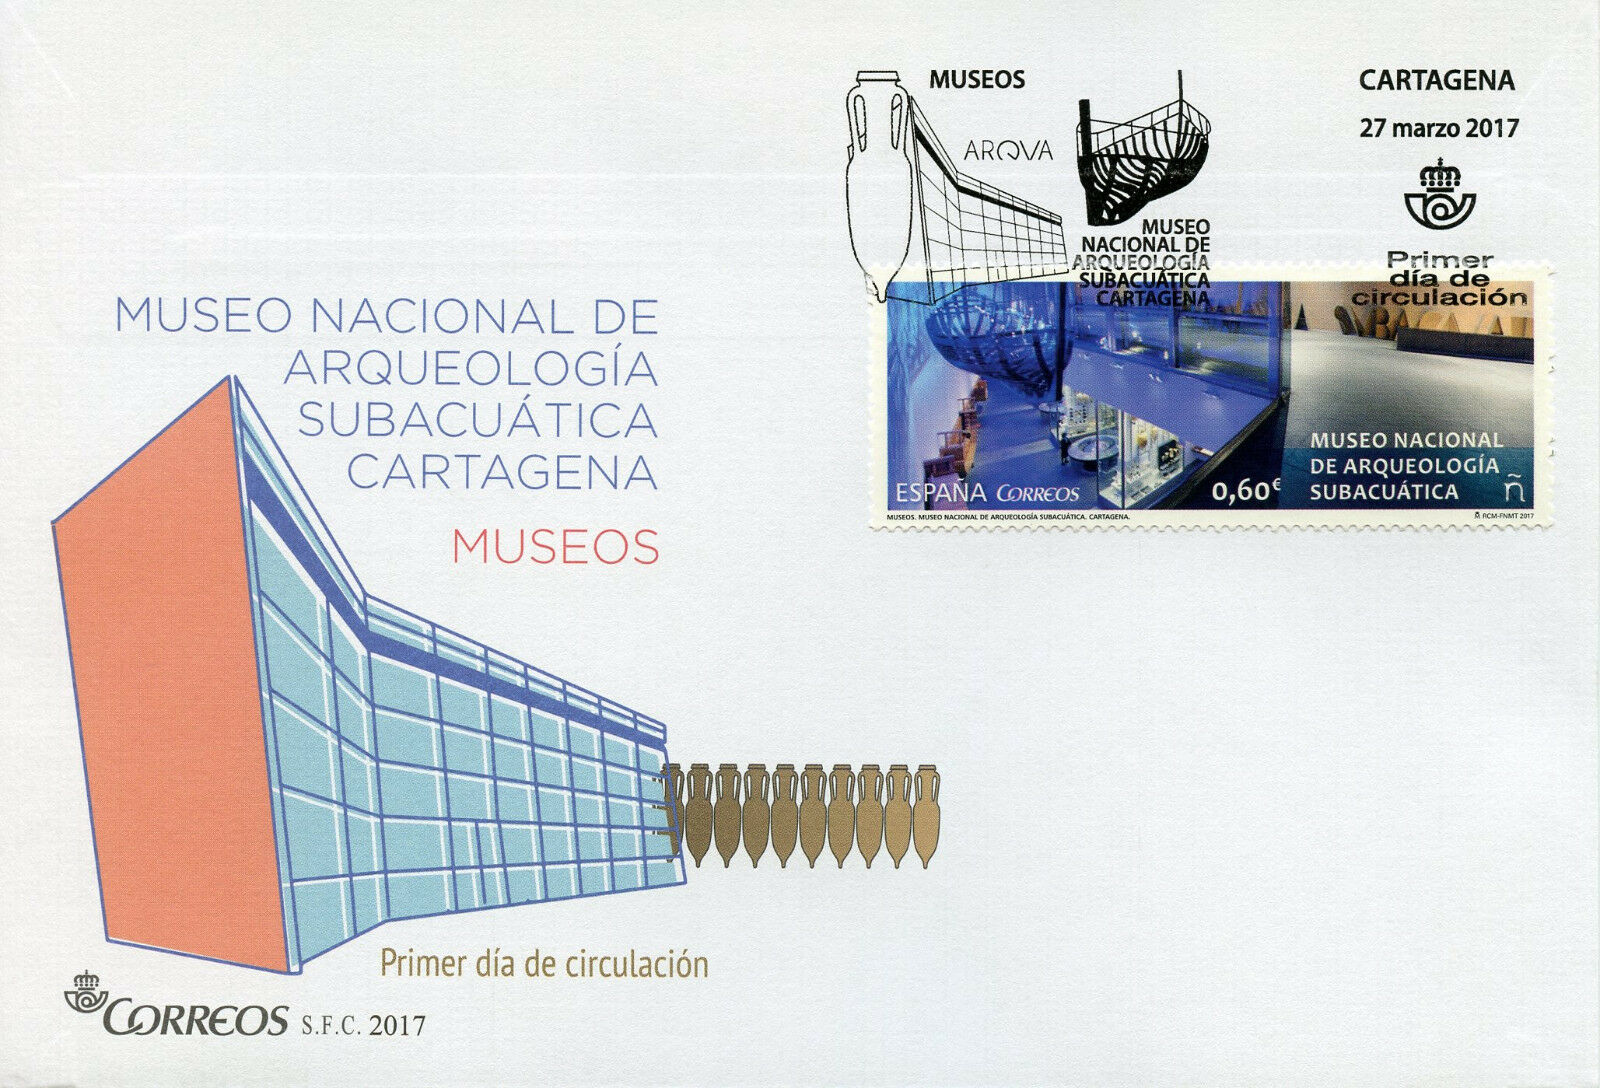 Spain 2017 FDC Museums La Rioja Centre Pompidou 3v Set on 3 Covers Art Stamps